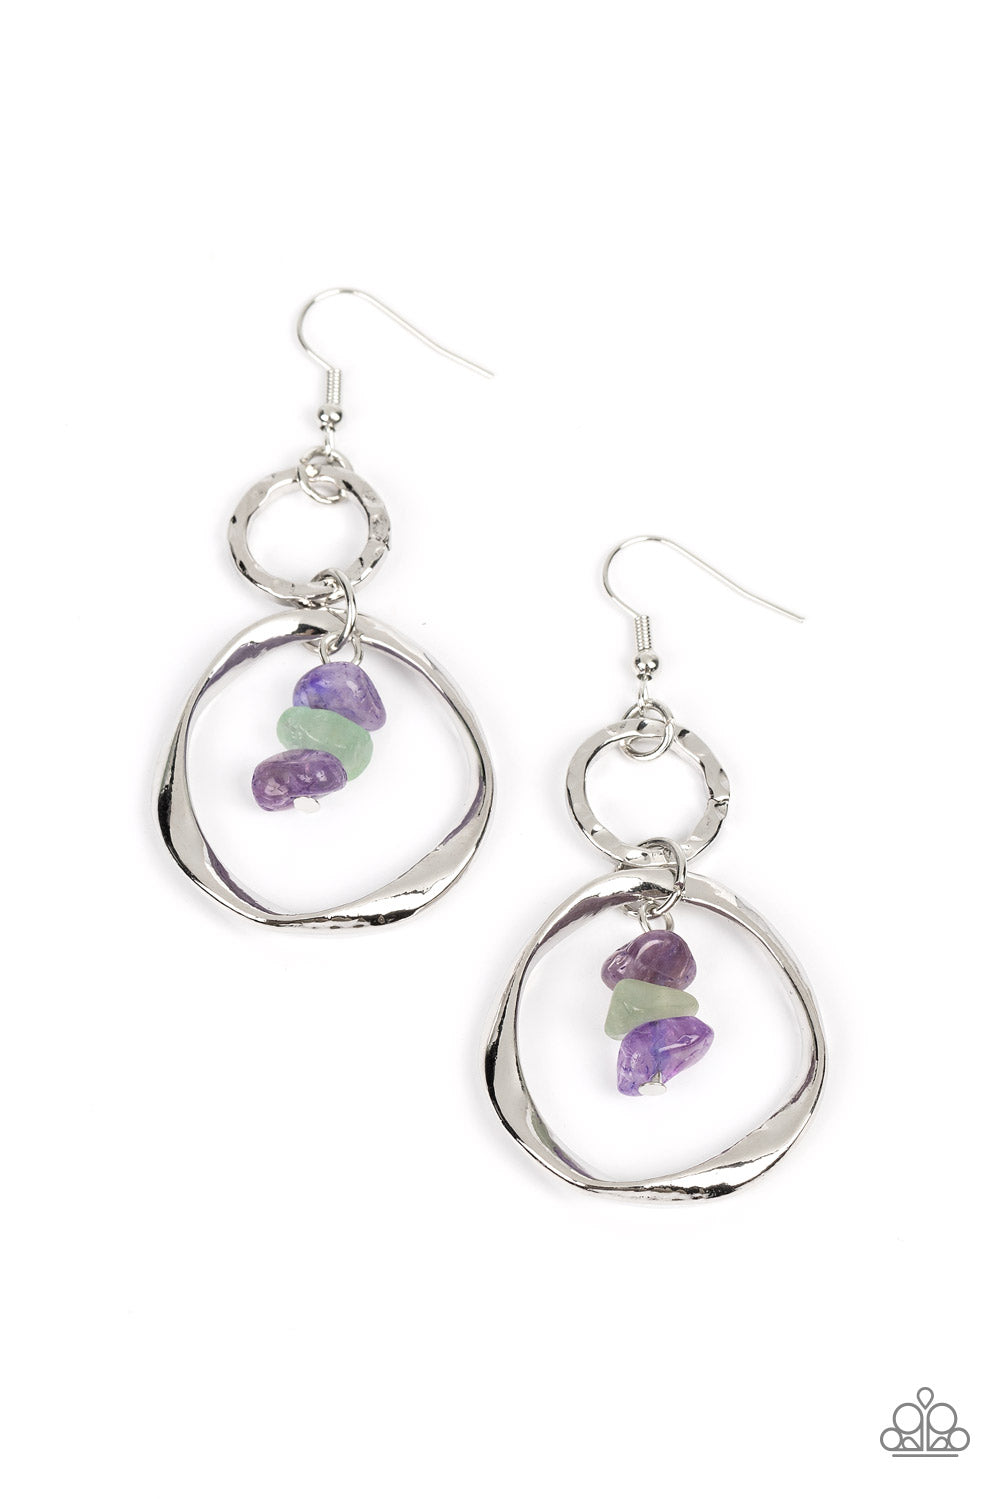 Good-Natured Spirit - Amethyst Purple and Jade Pebble Stones Silver Fishhook Earrings